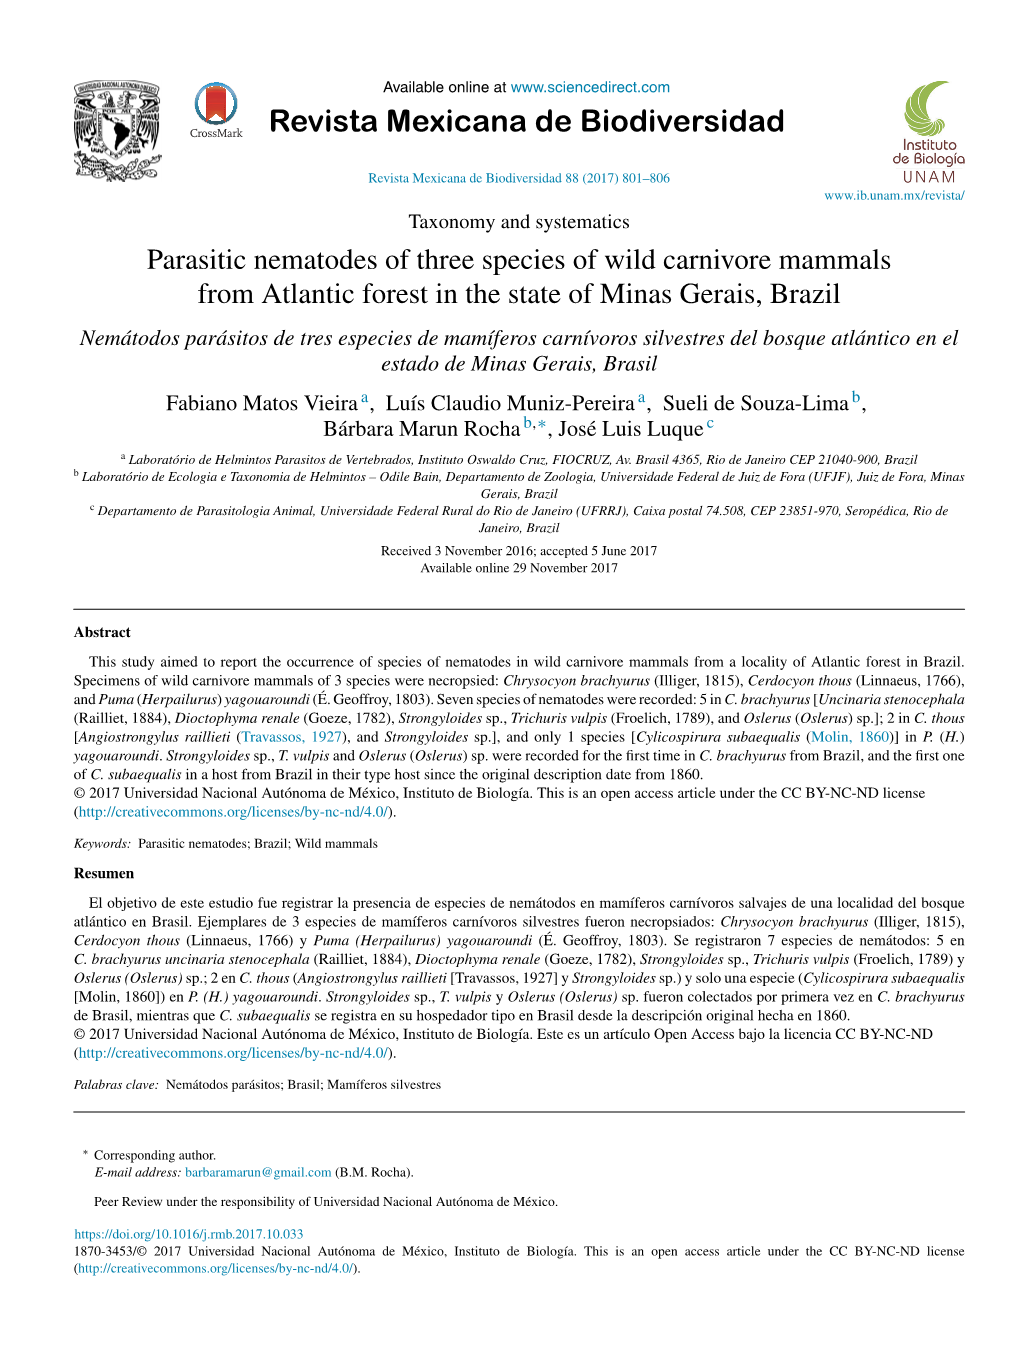 Parasitic Nematodes of Three Species of Wild Carnivore Mammals From